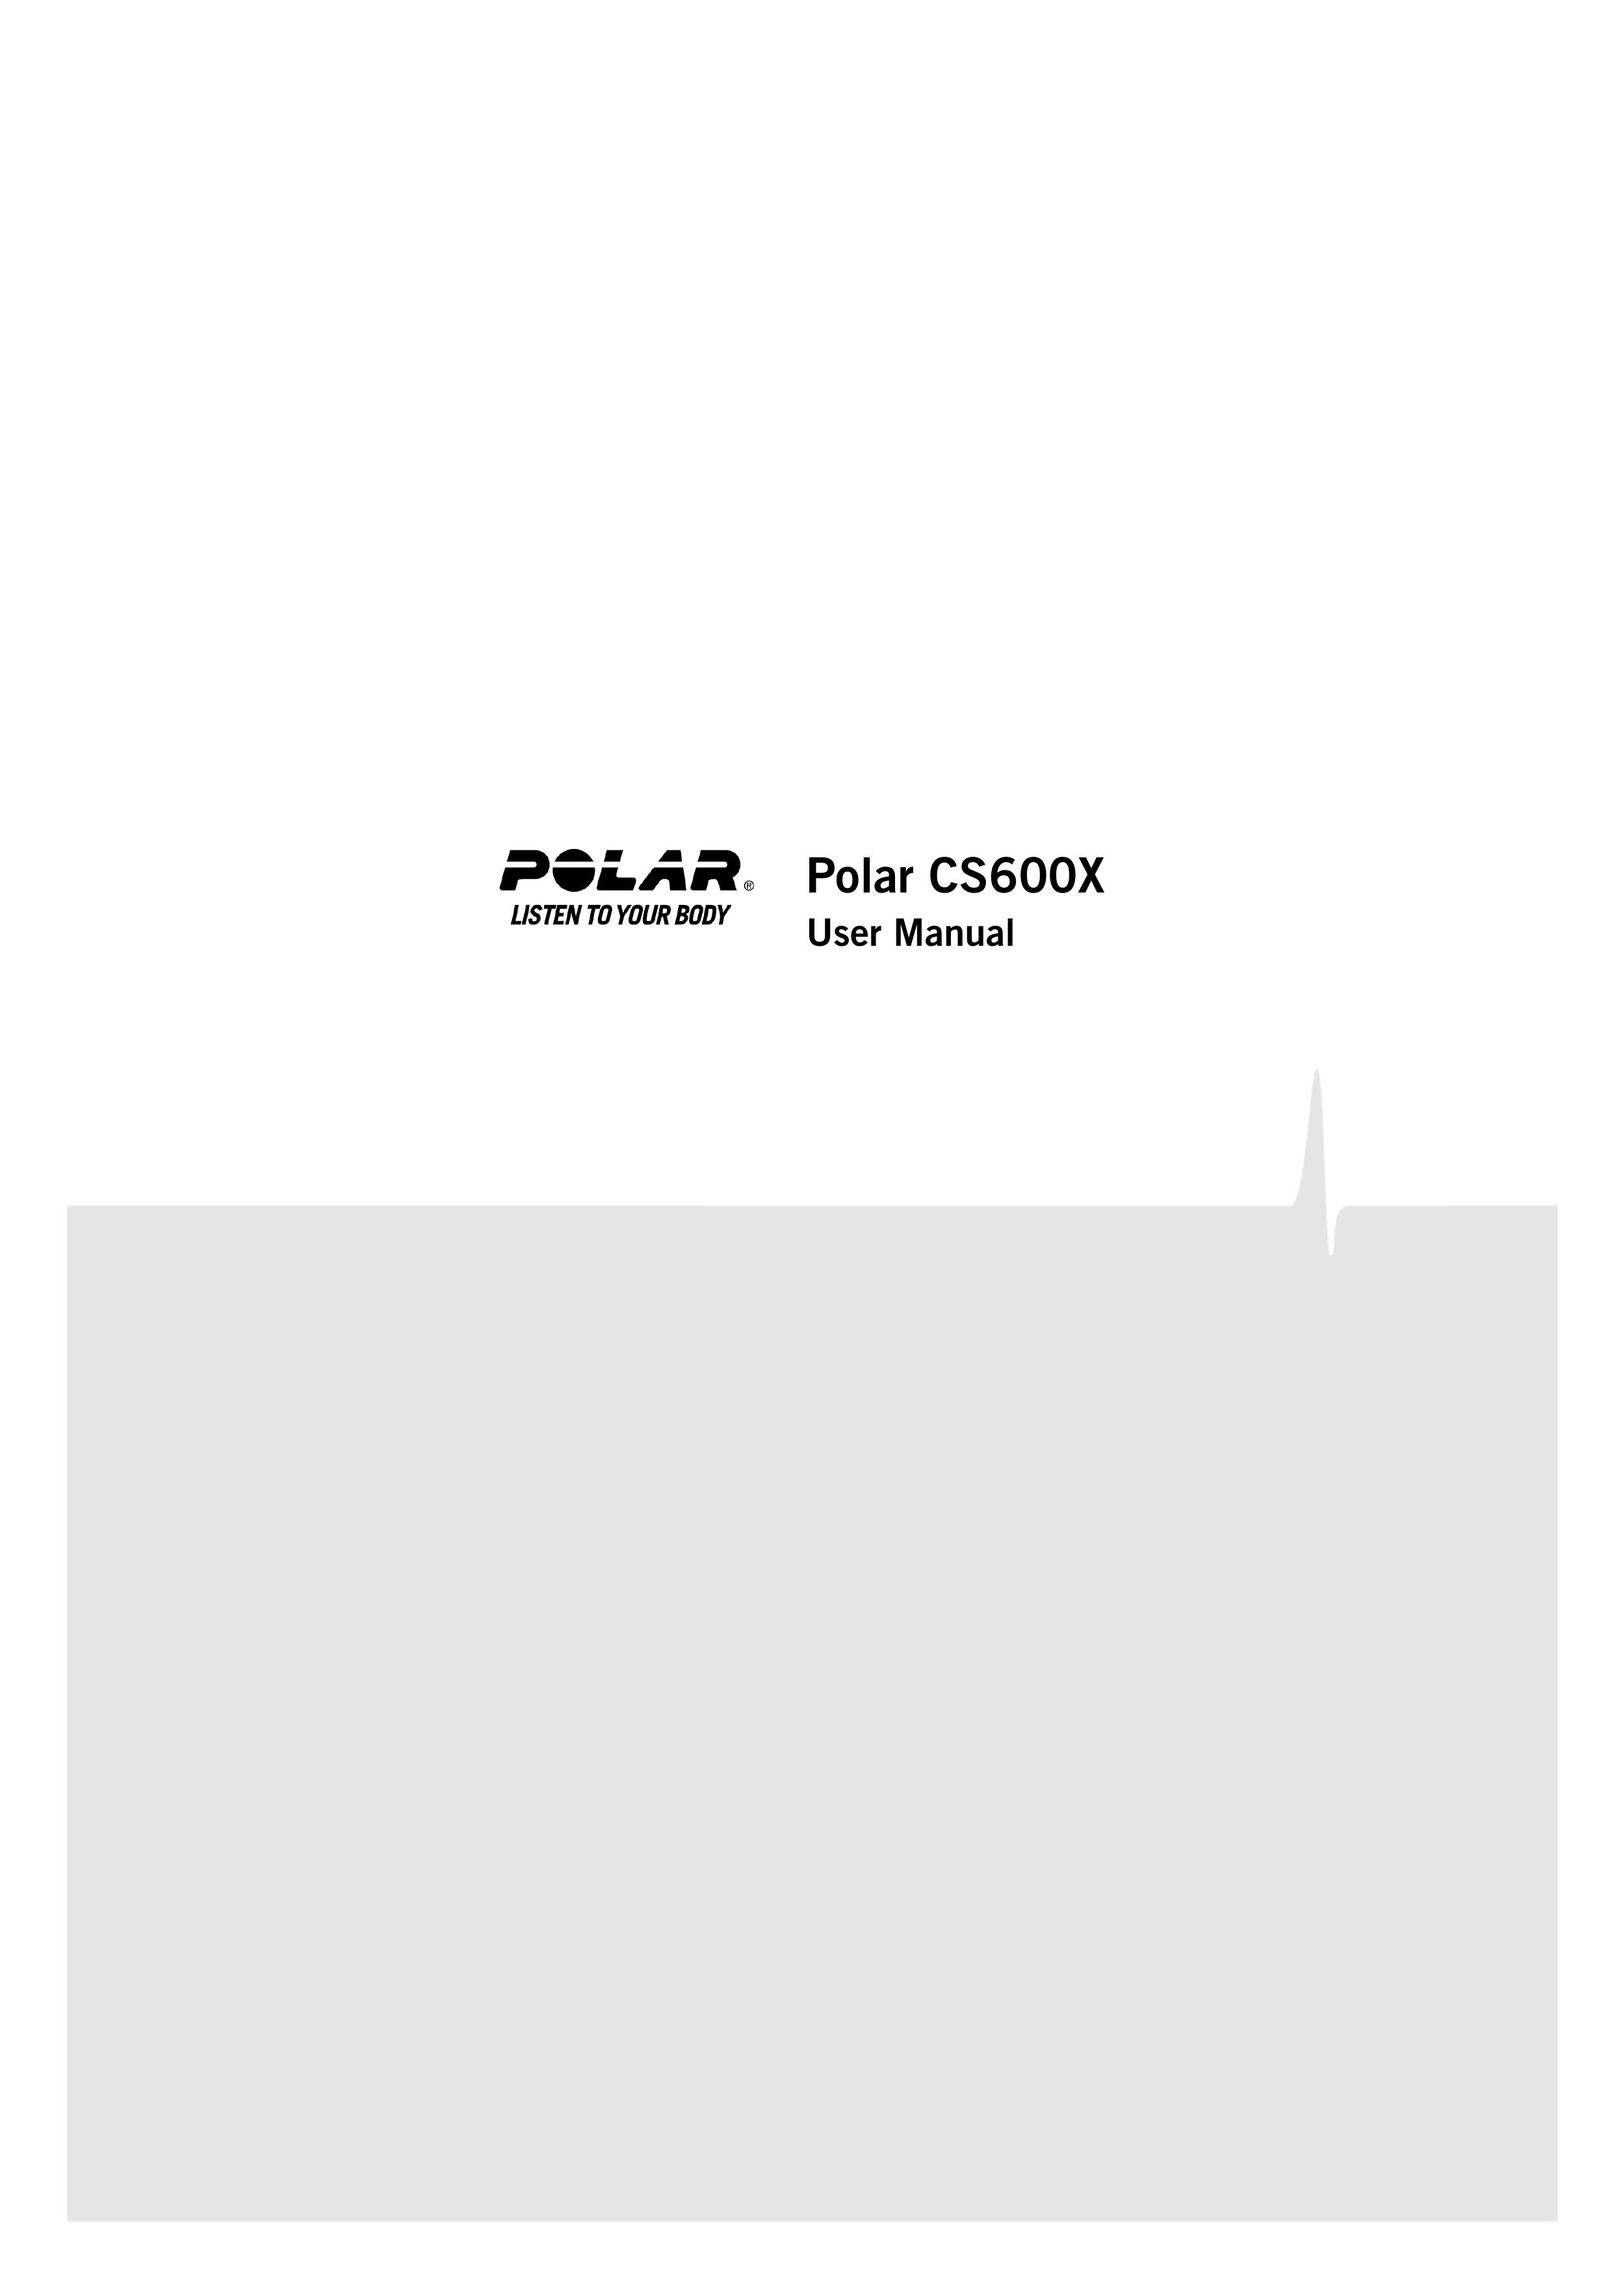 Polar CS600X Bicycle Accessories User Manual